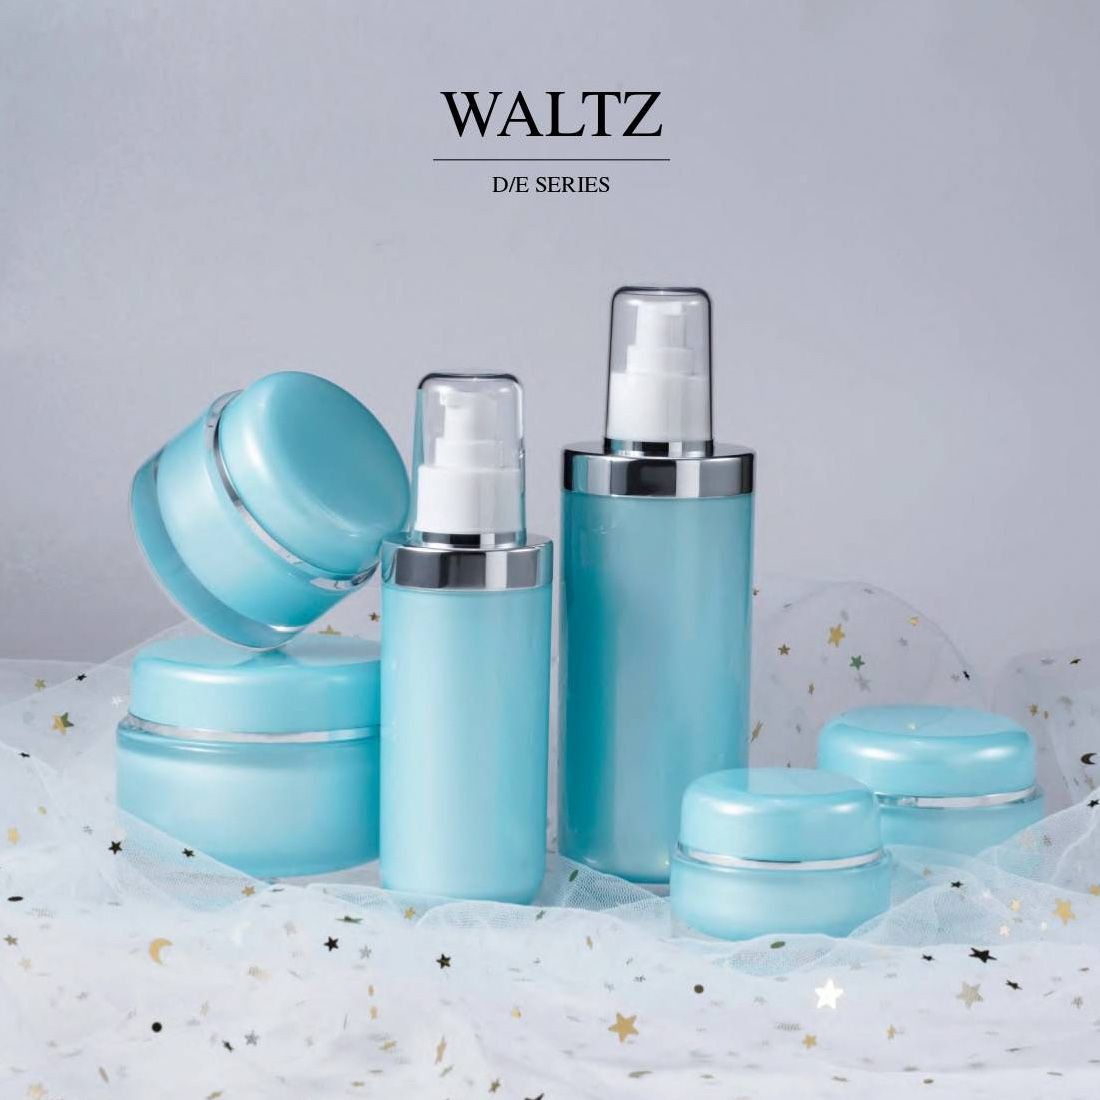 COSJAR cometic container design - Waltz series